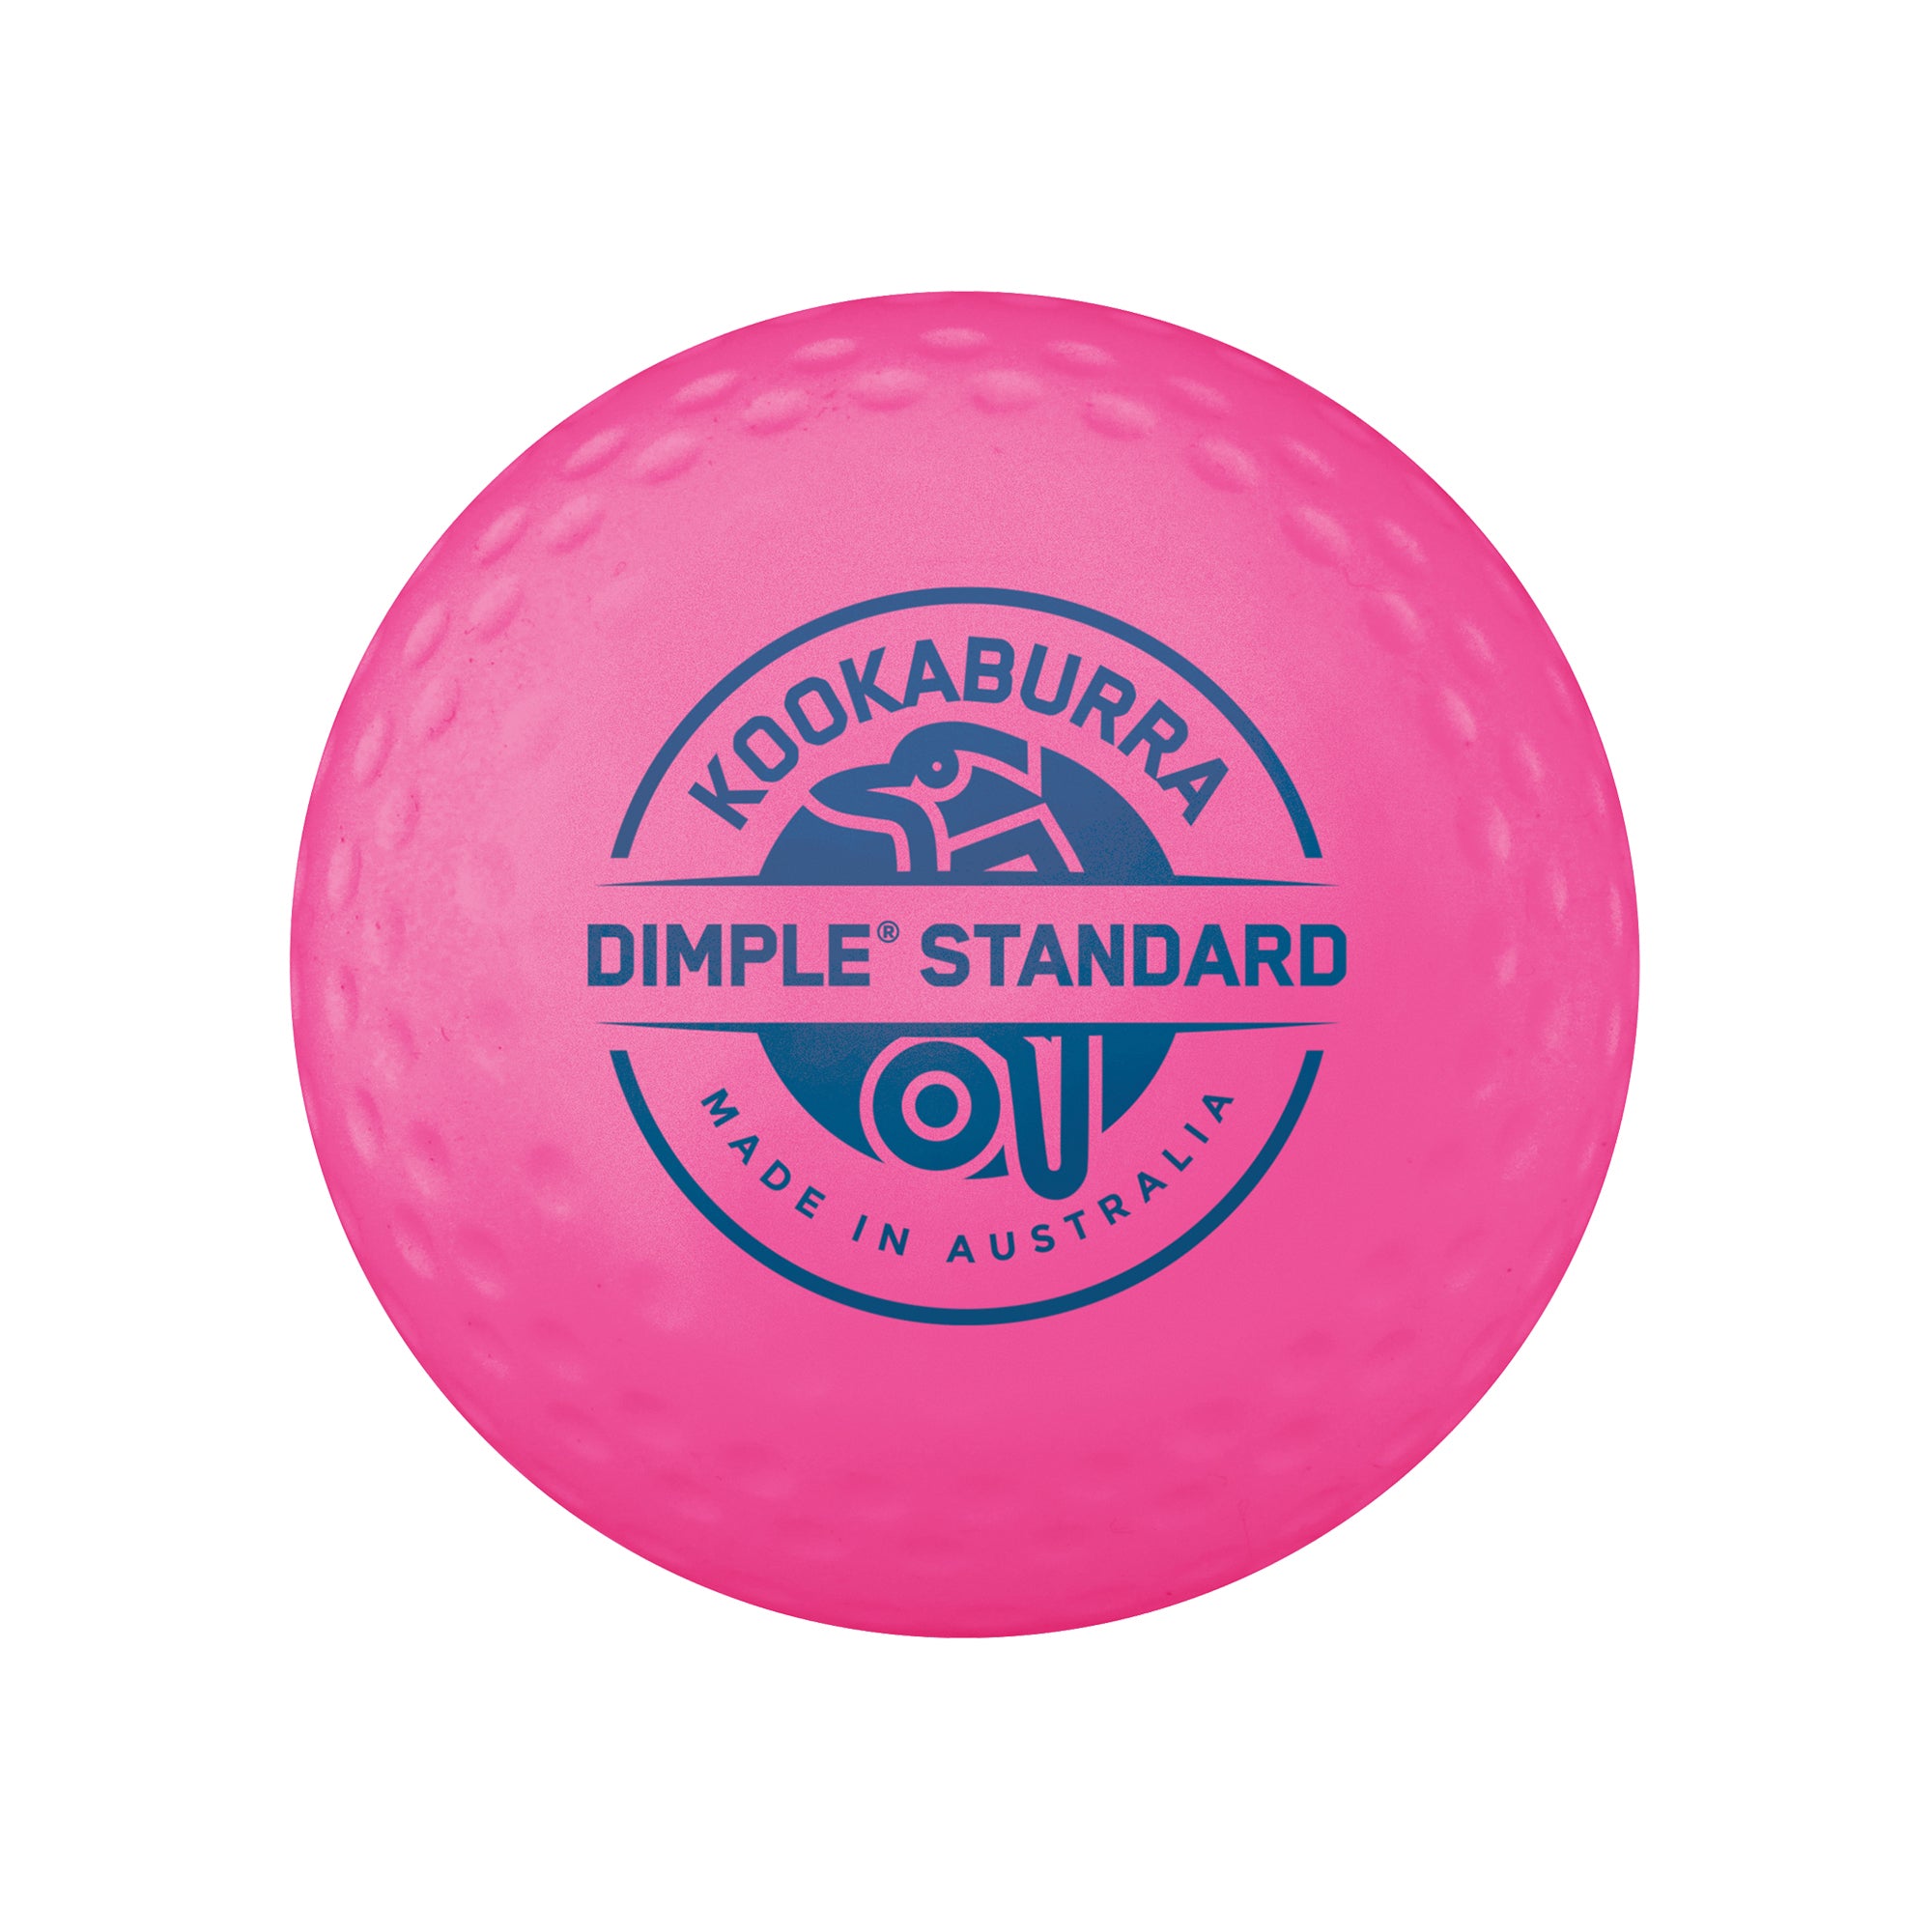 Kookaburra Dimple Standard Hockey Ball - Pink